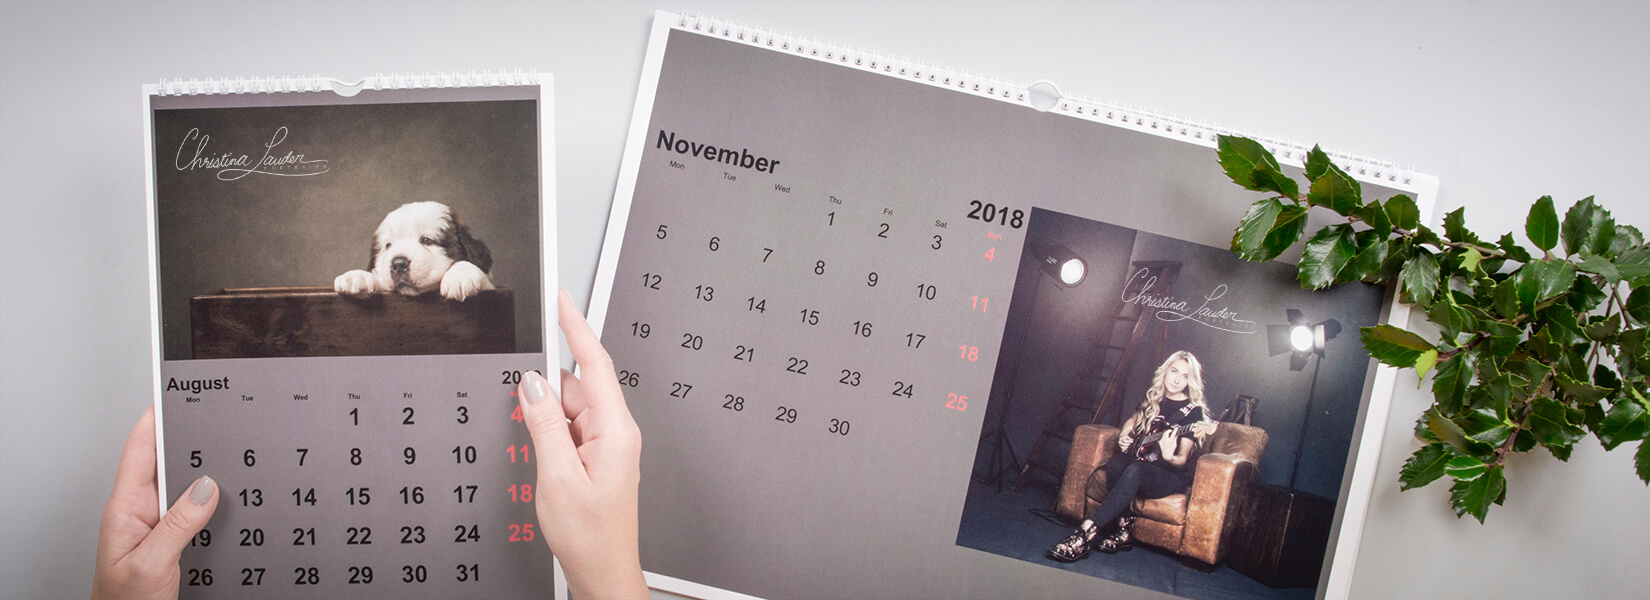 Calendar basic photo calendar professional print nphoto printing lab